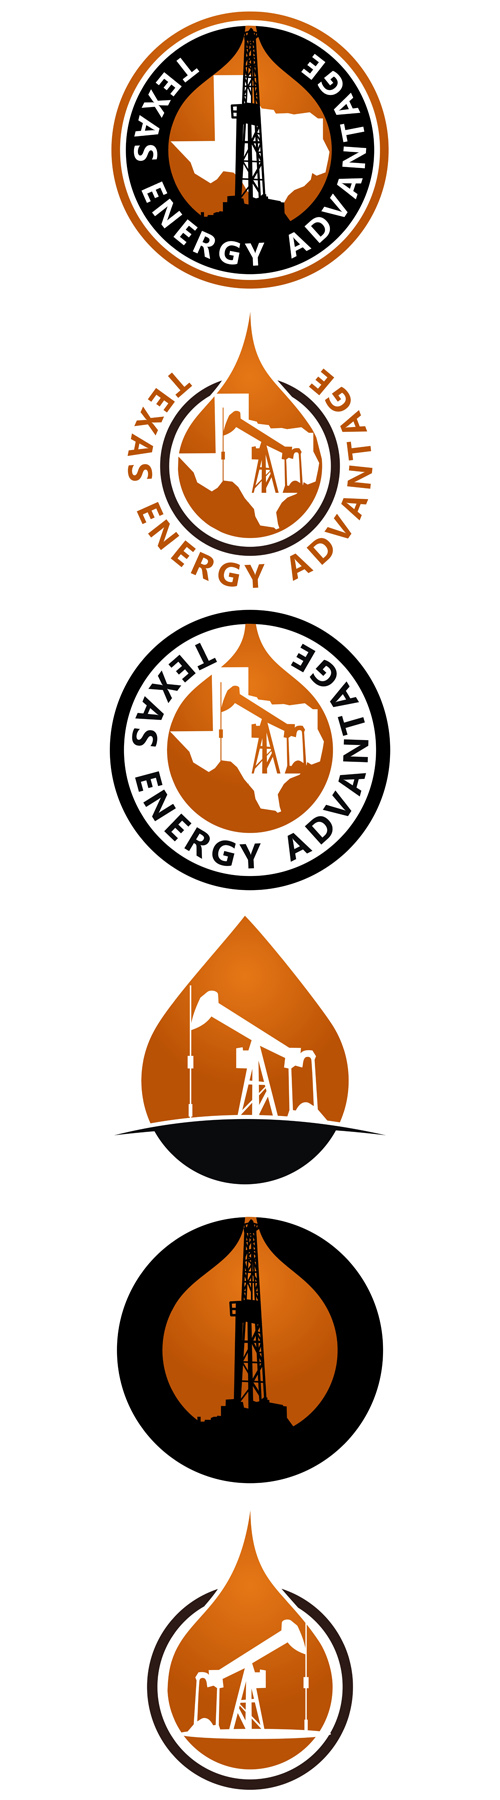 Oil mining logo - Vectors